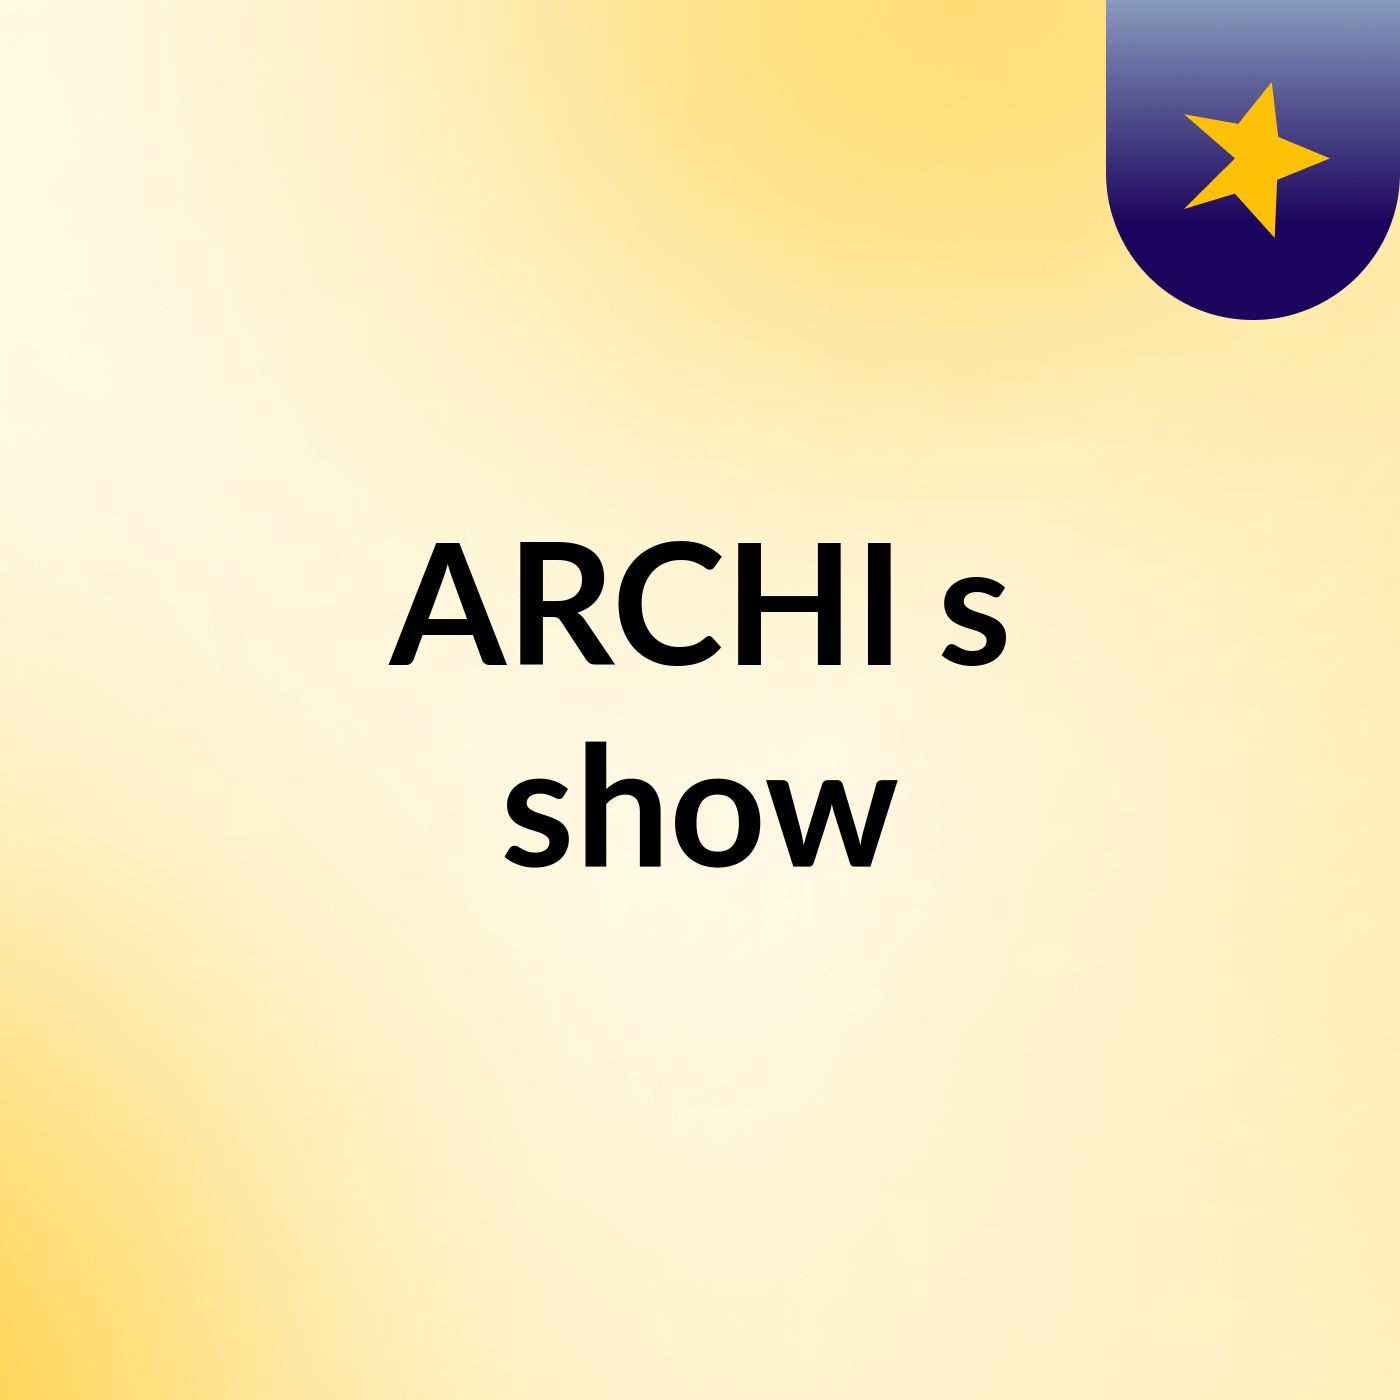 ARCHI's show